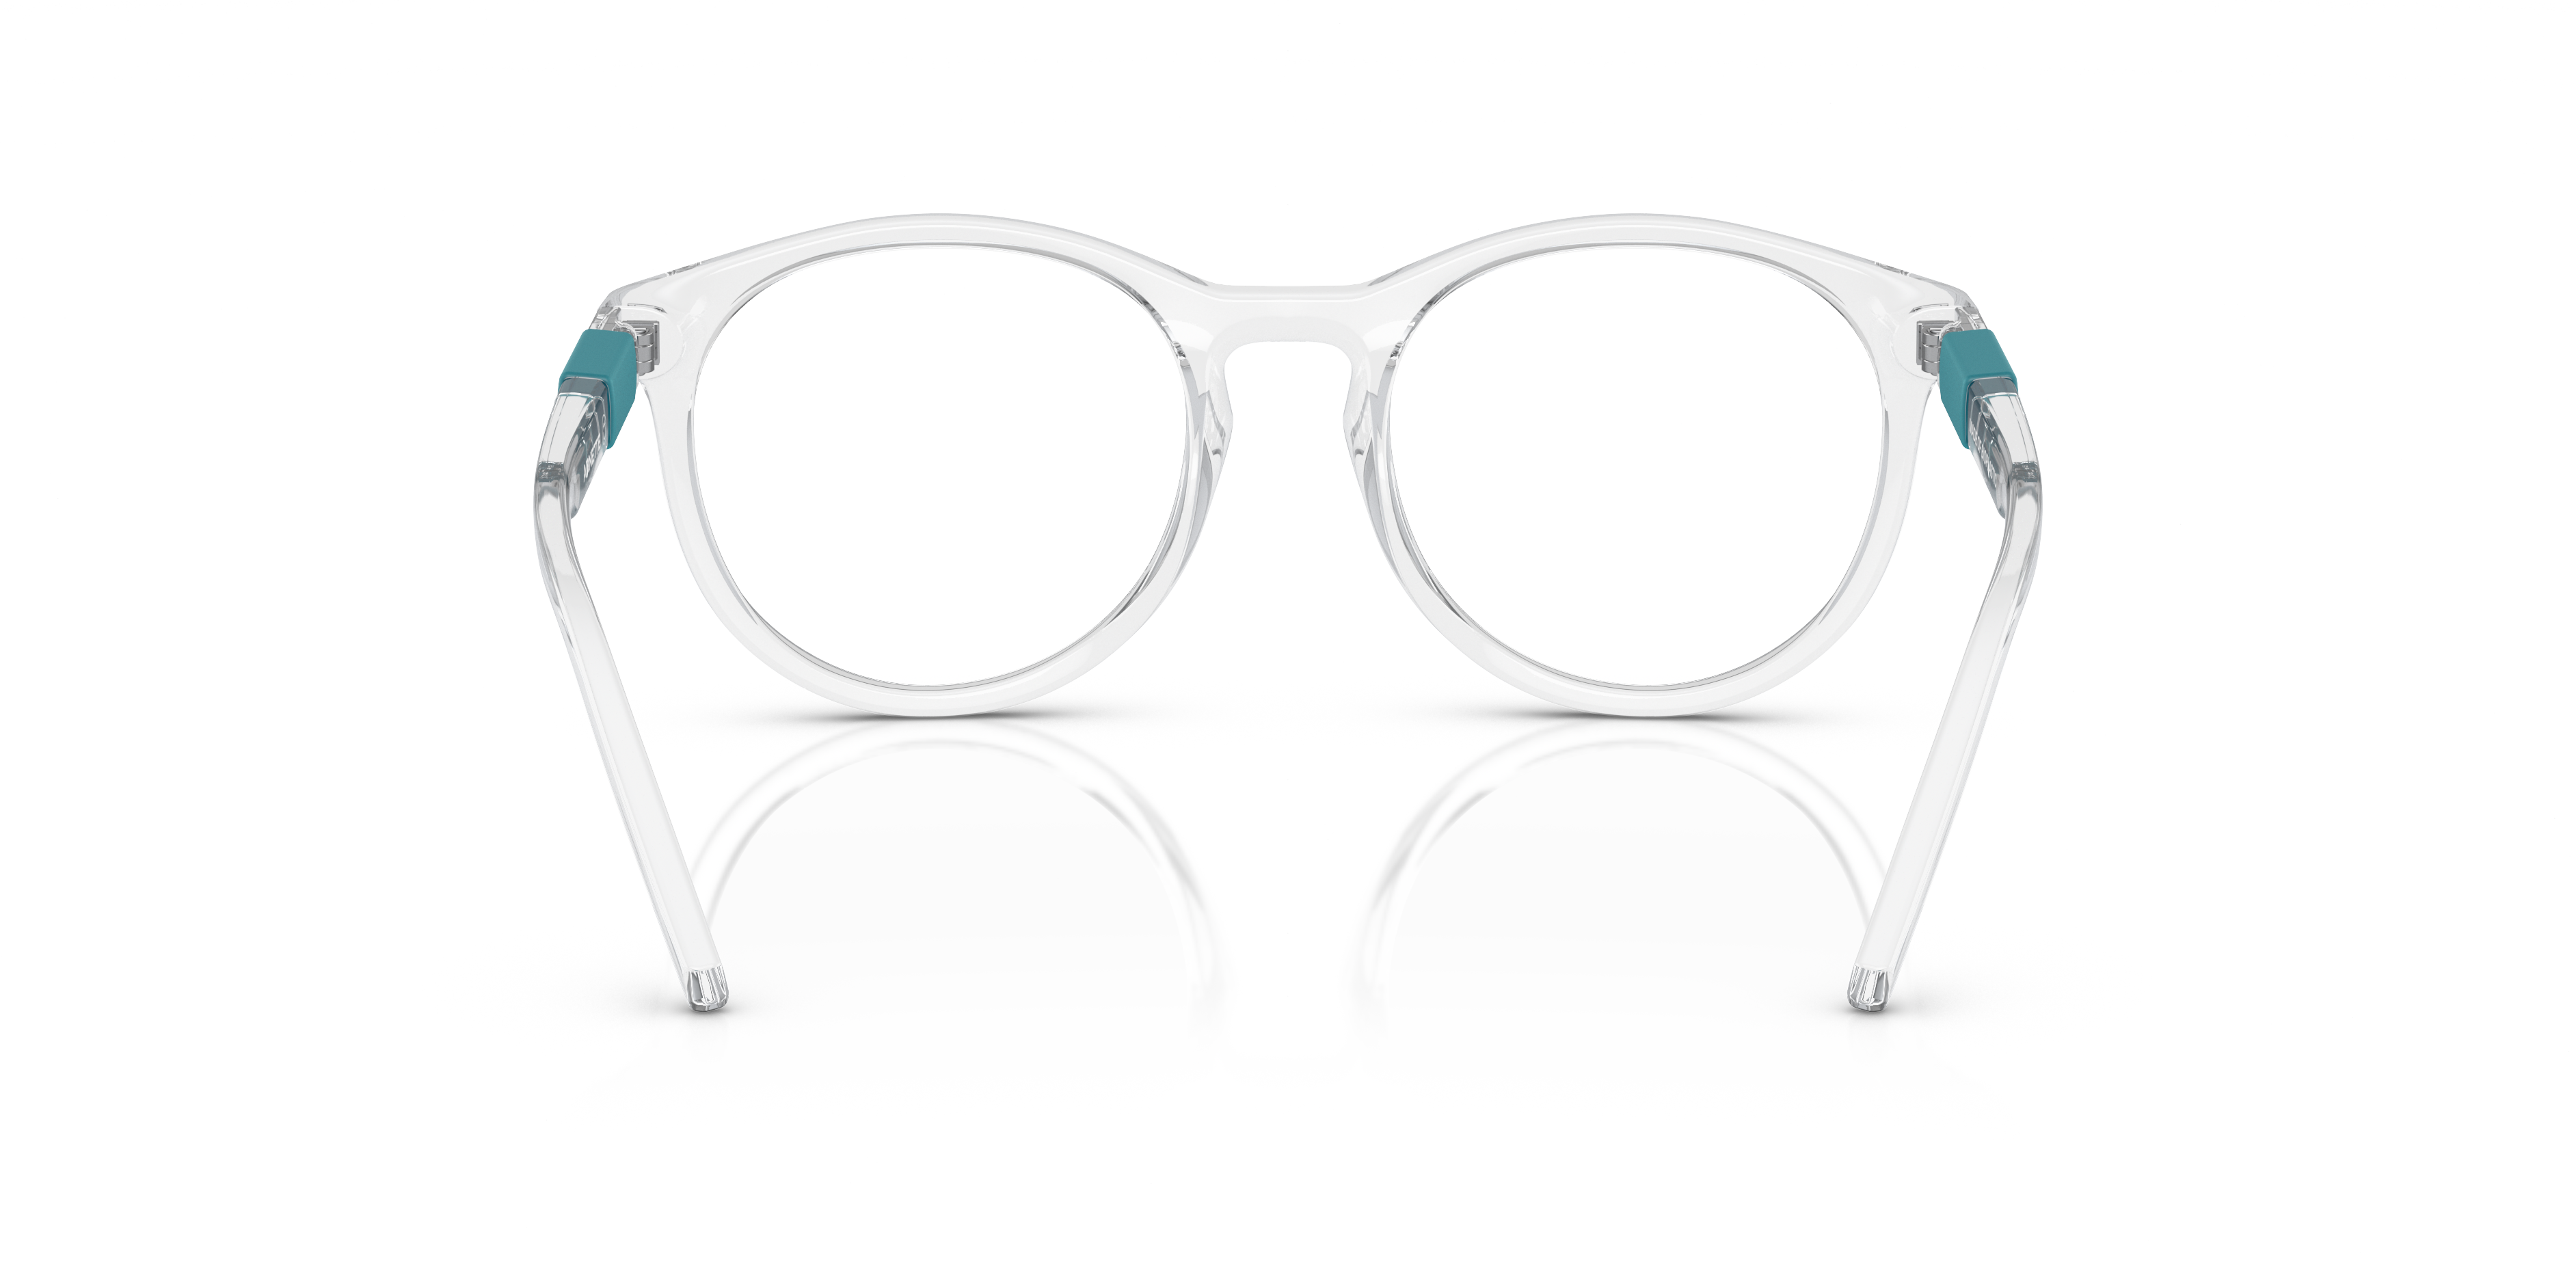 Detail02 Arnette AN 7225 Children's Glasses Transparent / Transparent, Clear